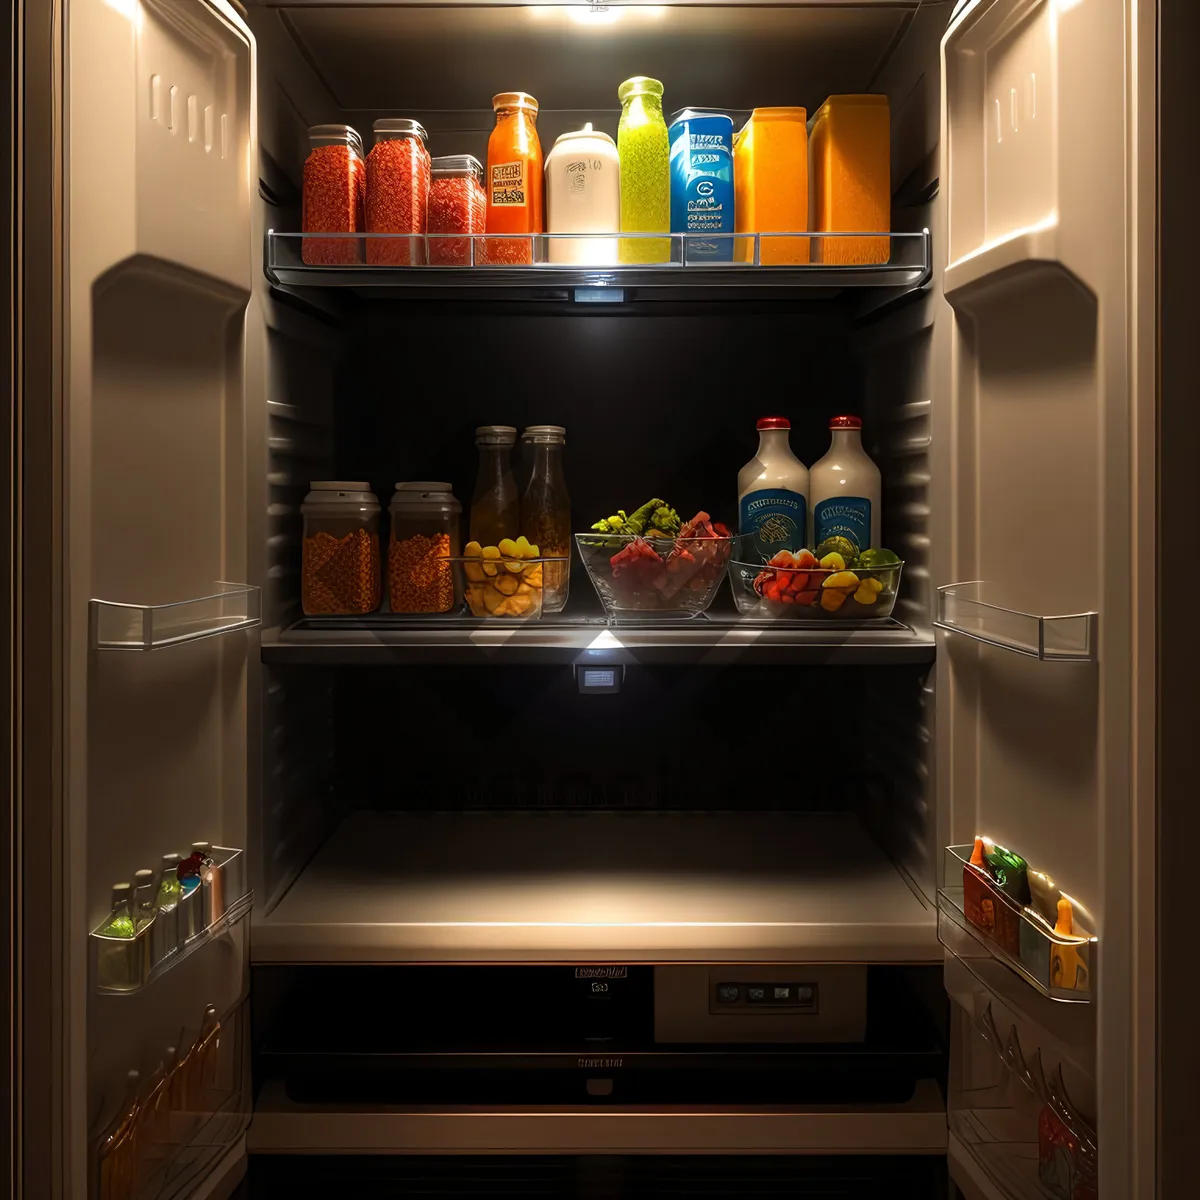 Picture of Modern White Kitchen Refrigerator